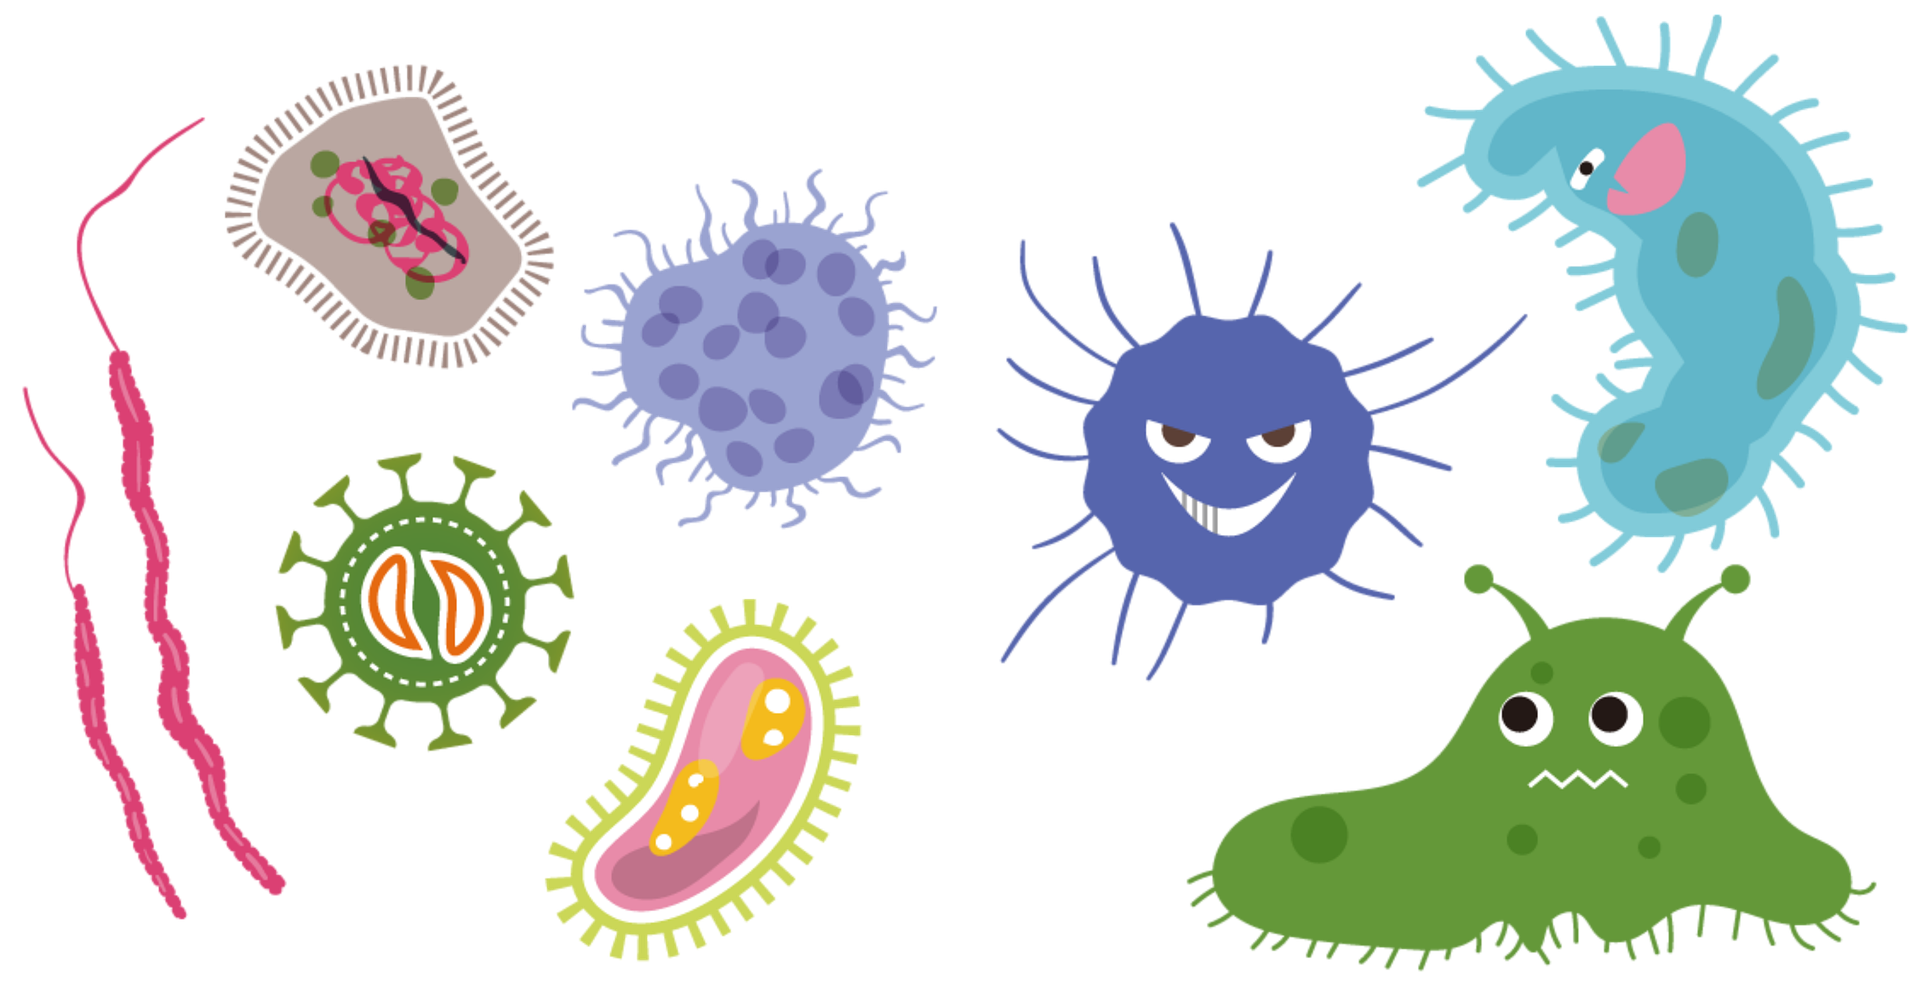 bakterie-virus-mikroorganizmy-5545353-freepixabay